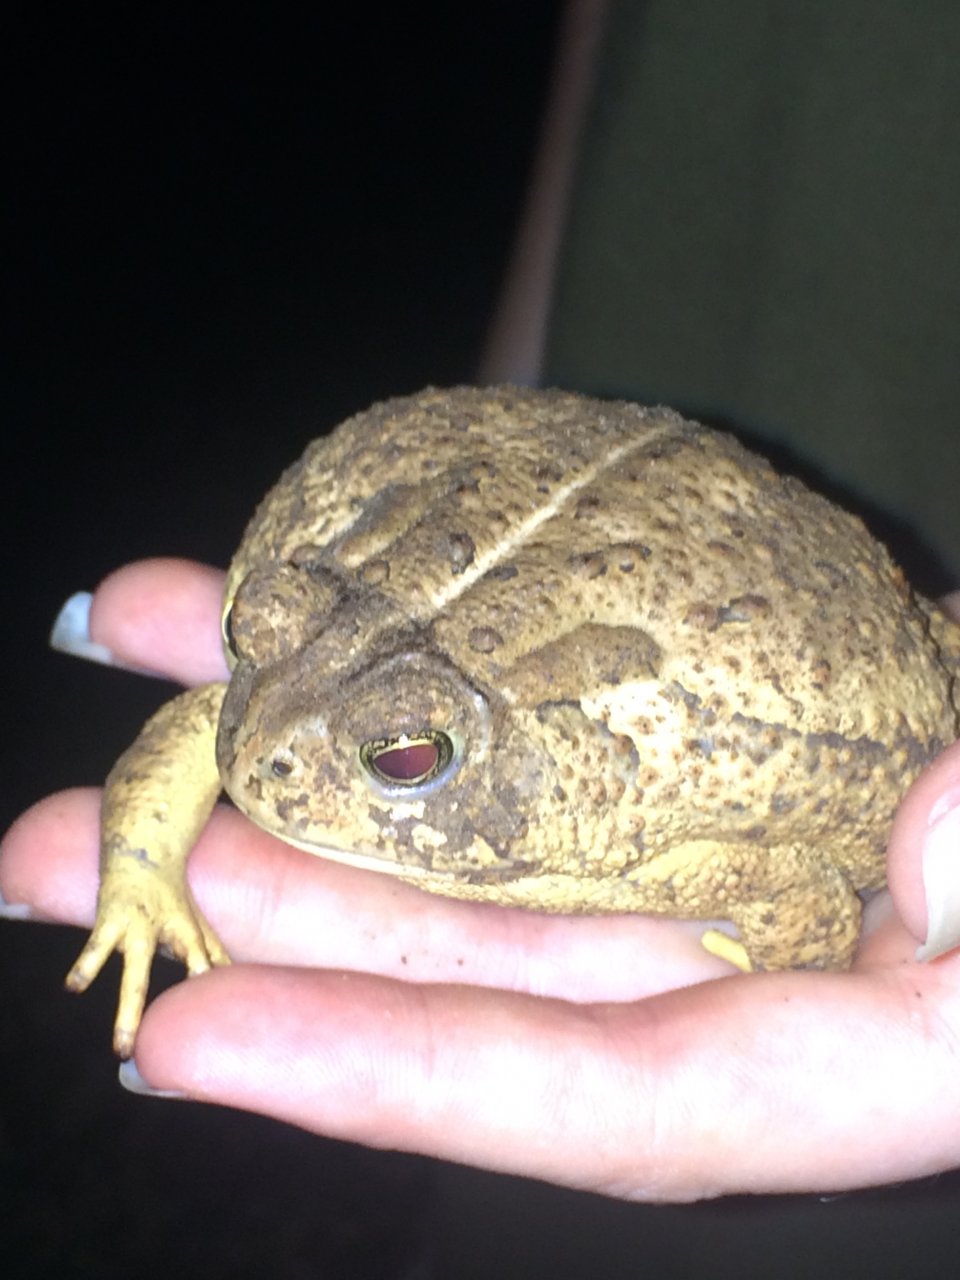 Big ol' Toad